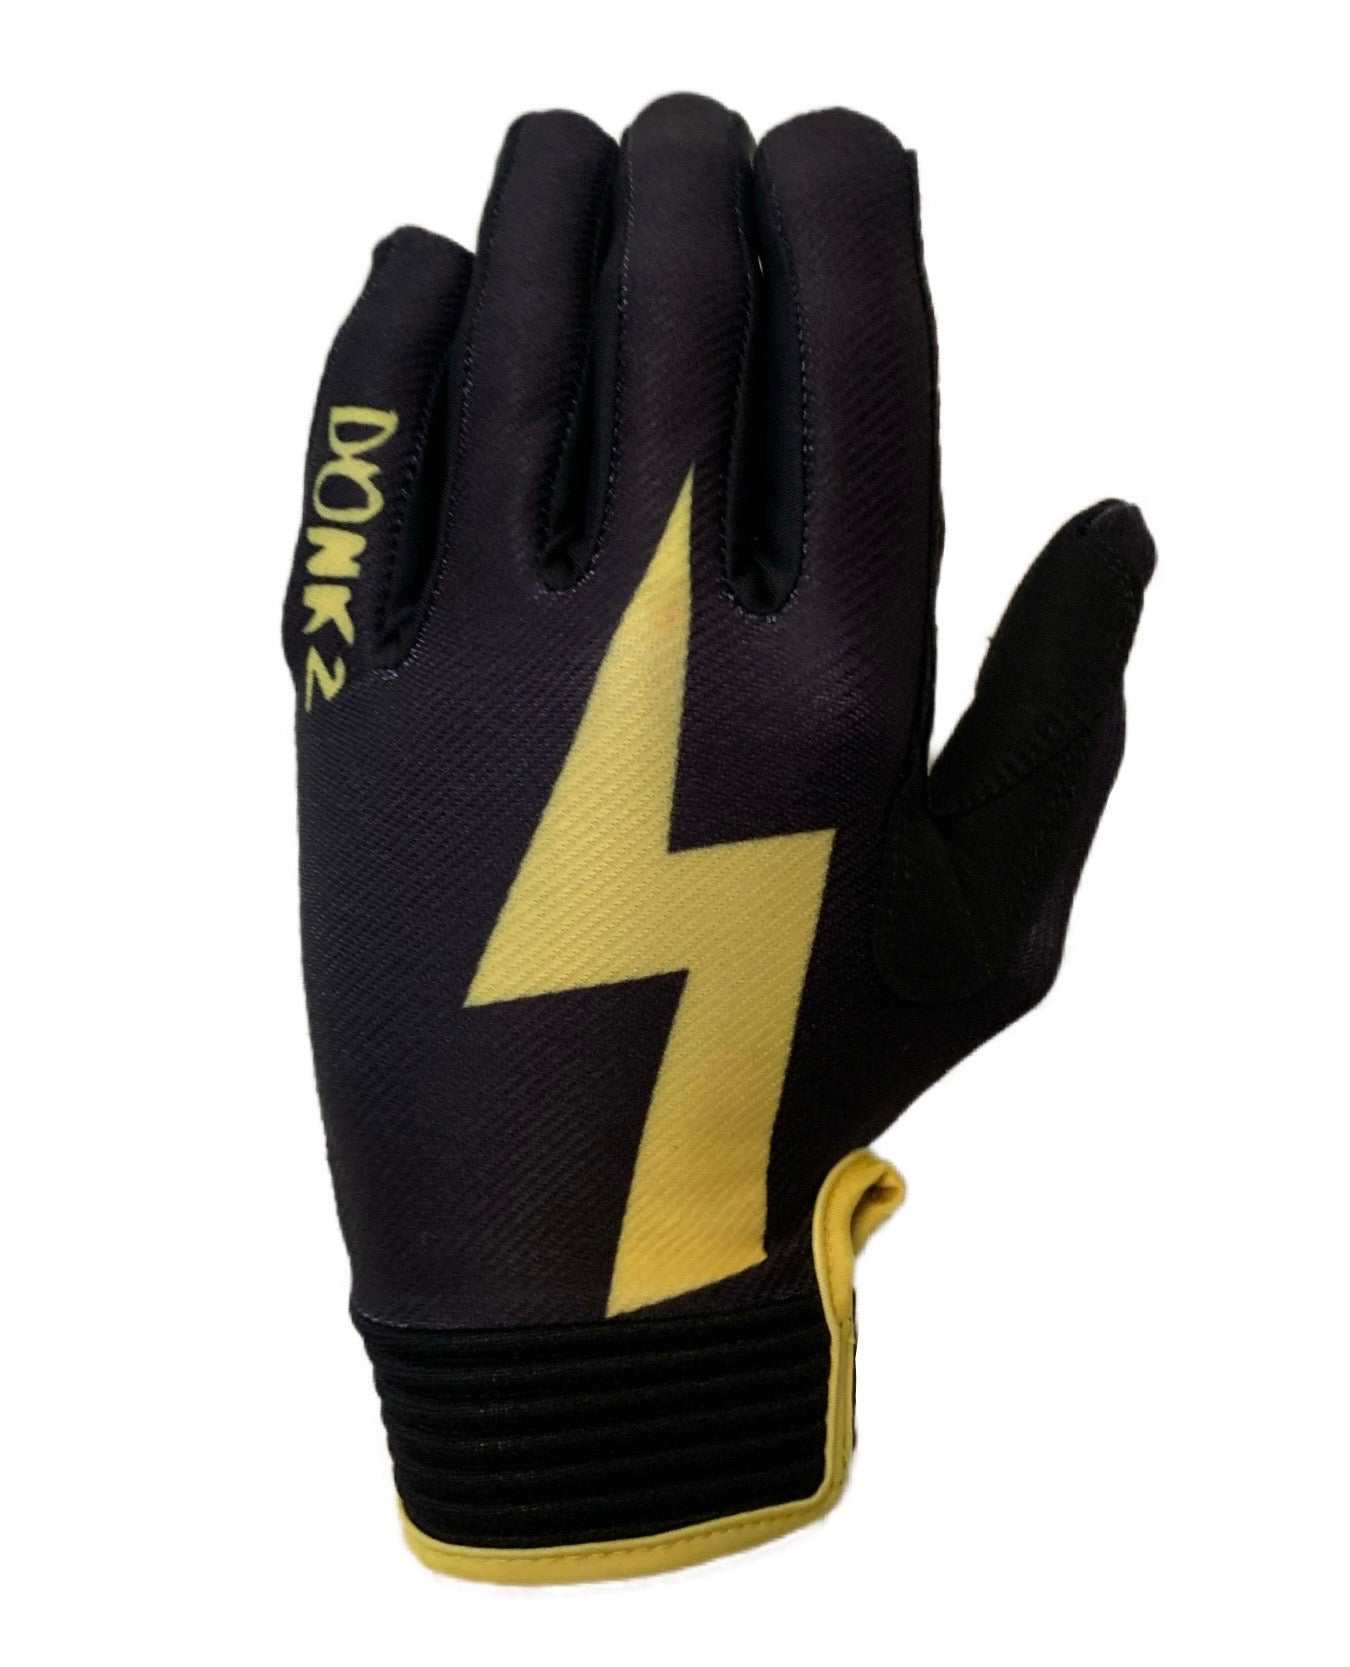 Black Donkz MX gloves with yellow lightning bolt